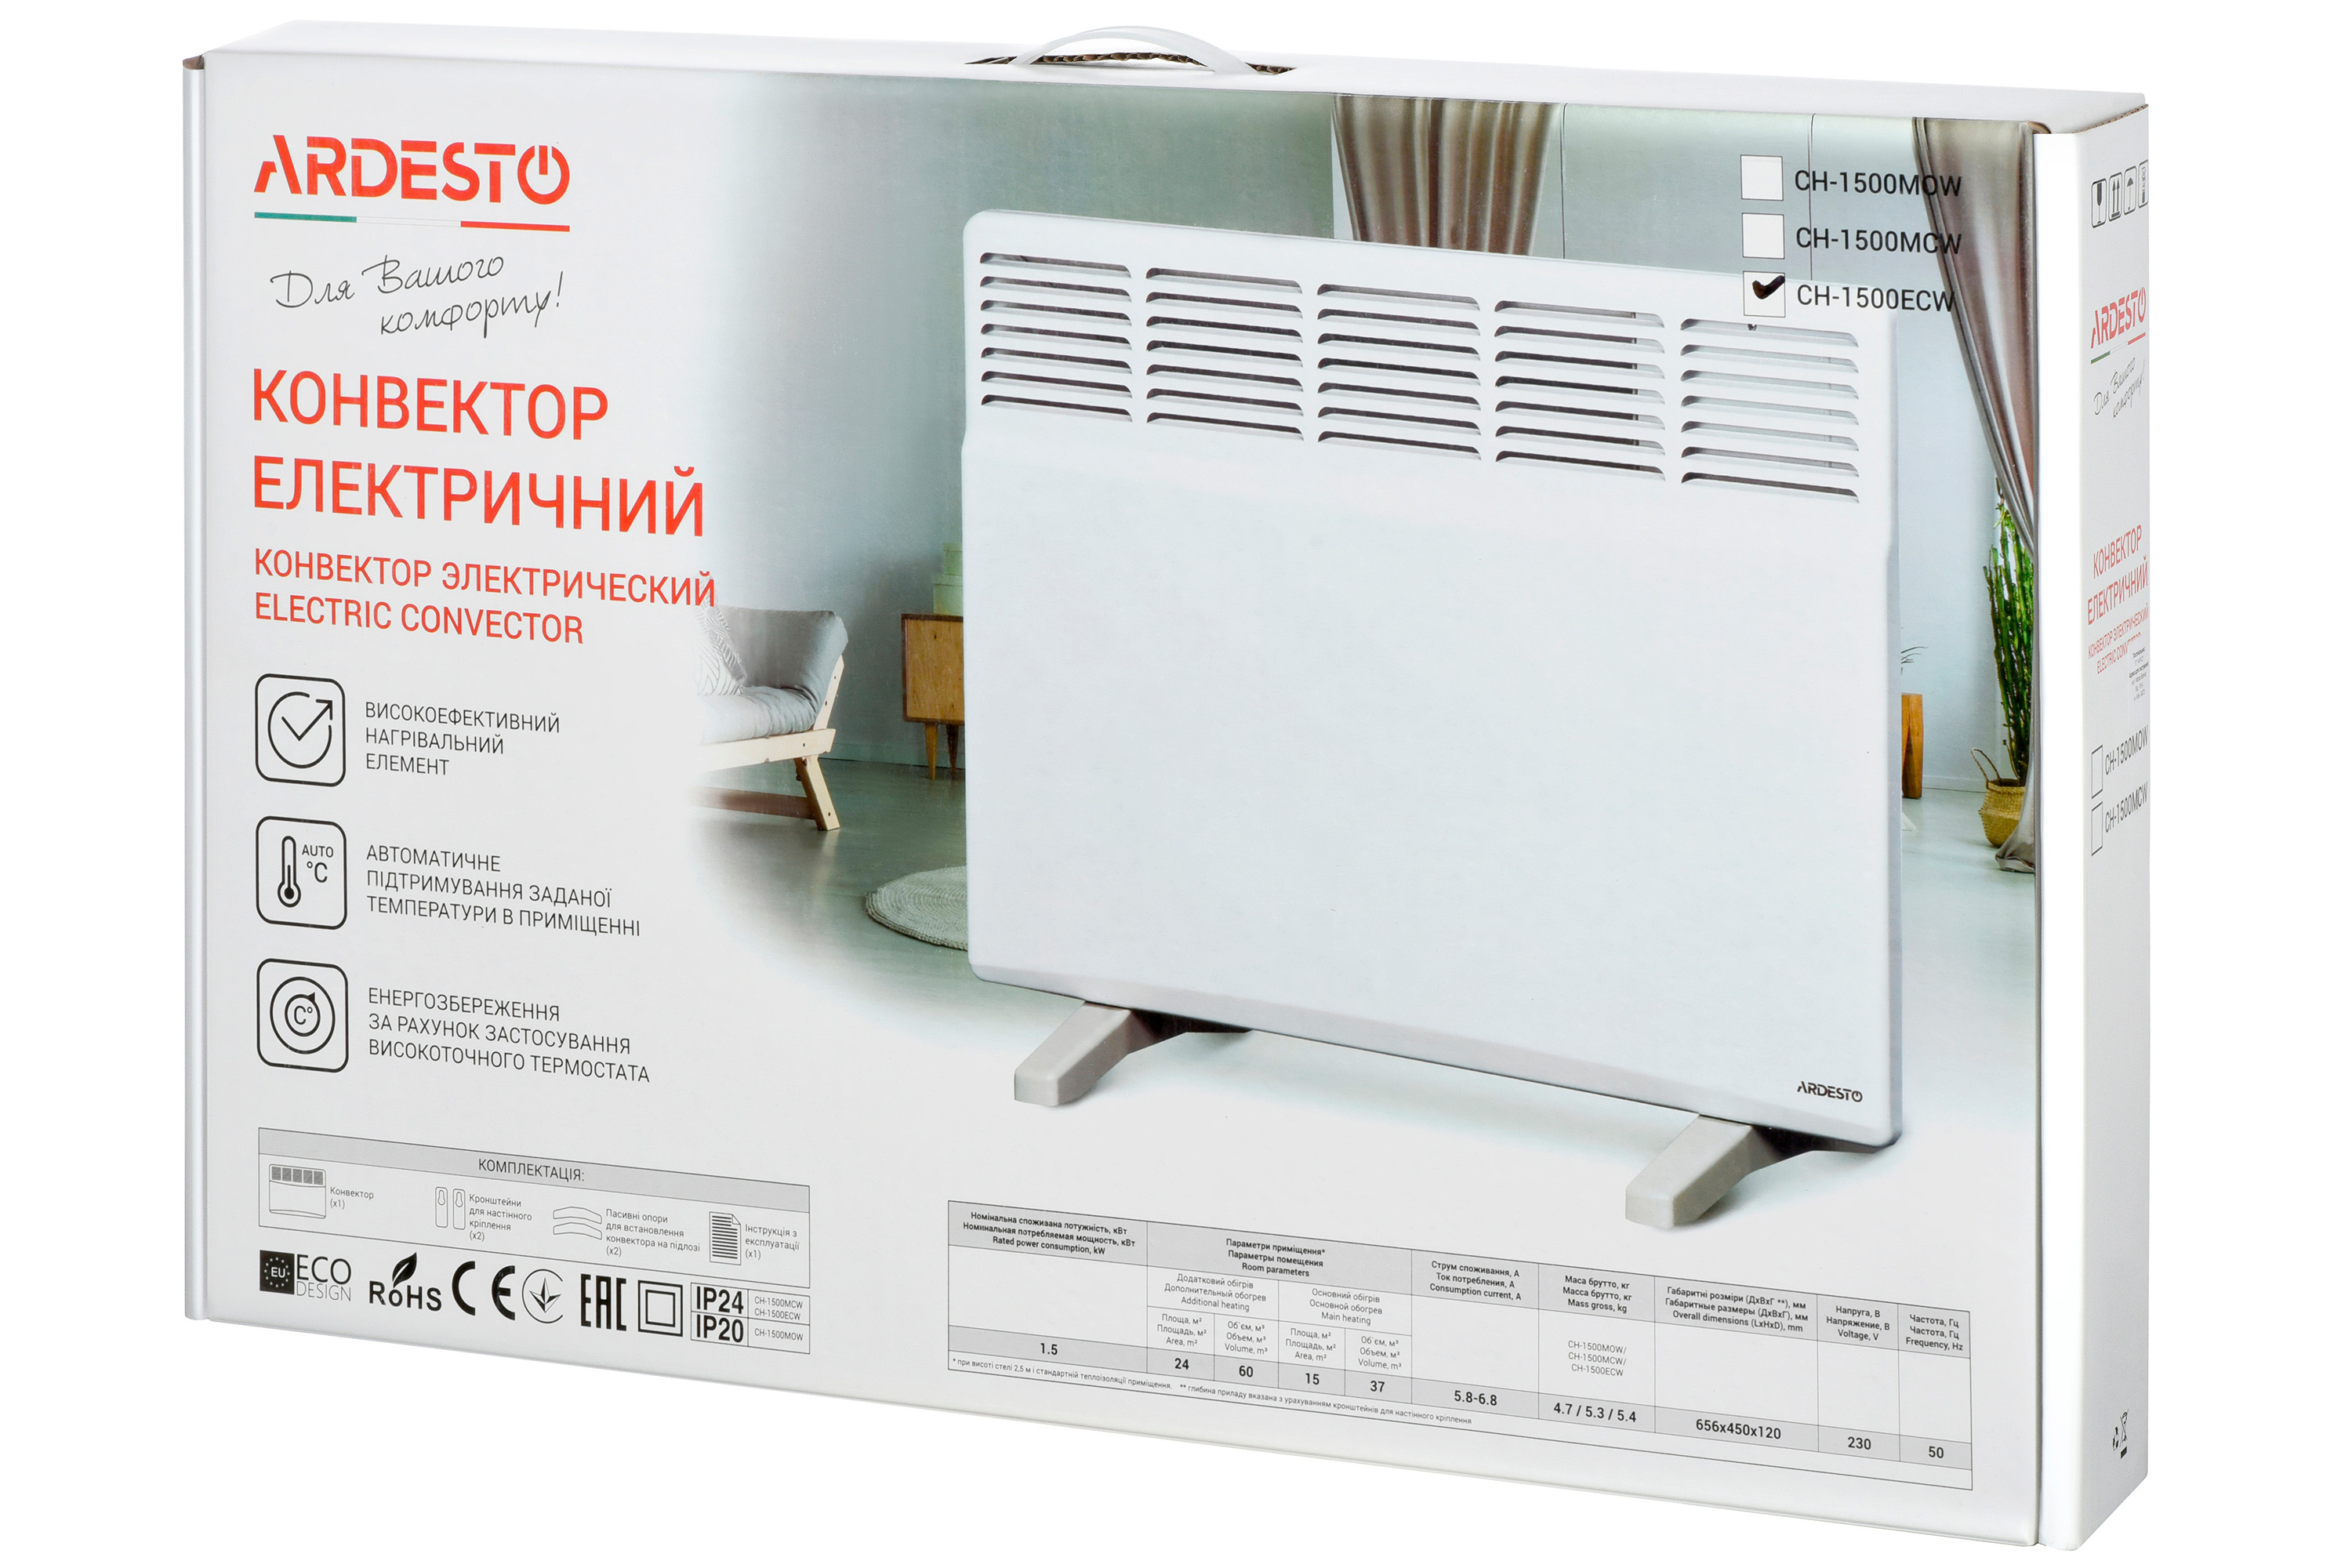 Электрический конвектор Ardesto CH-1500ECW характеристики - фотография 7